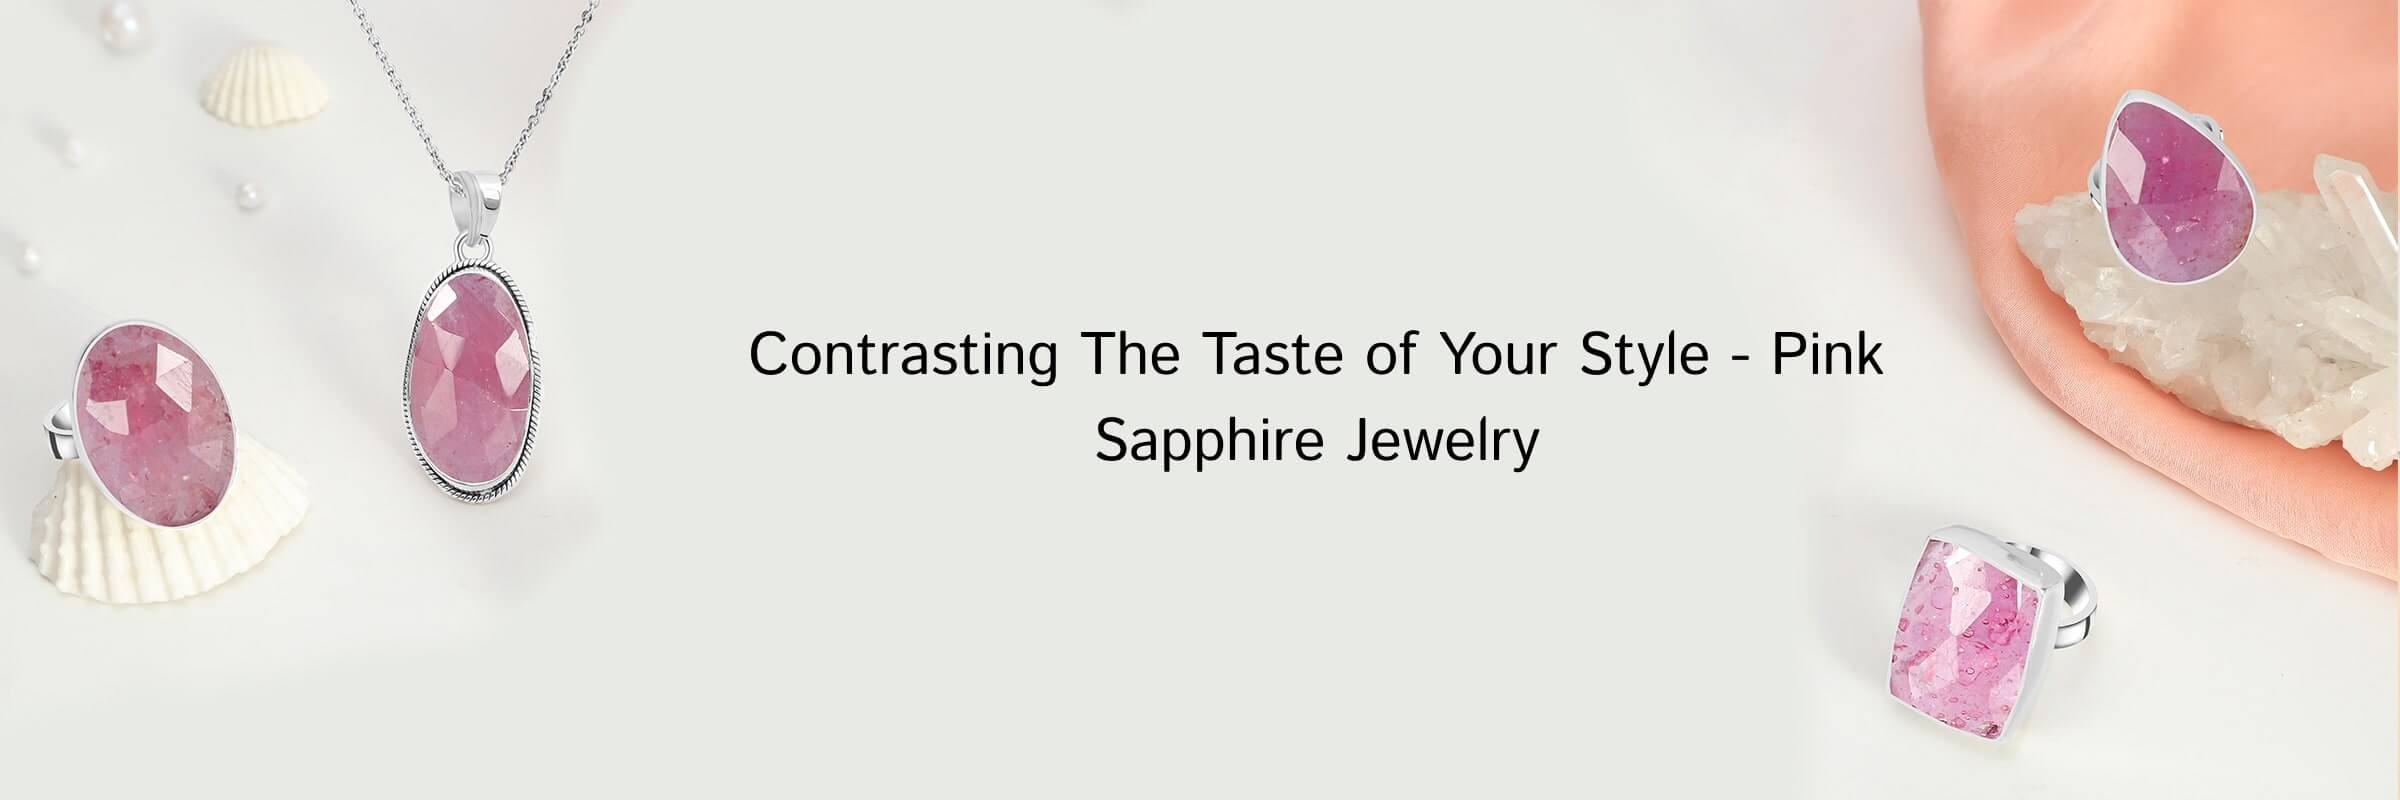 Pink Sapphire Jewelry